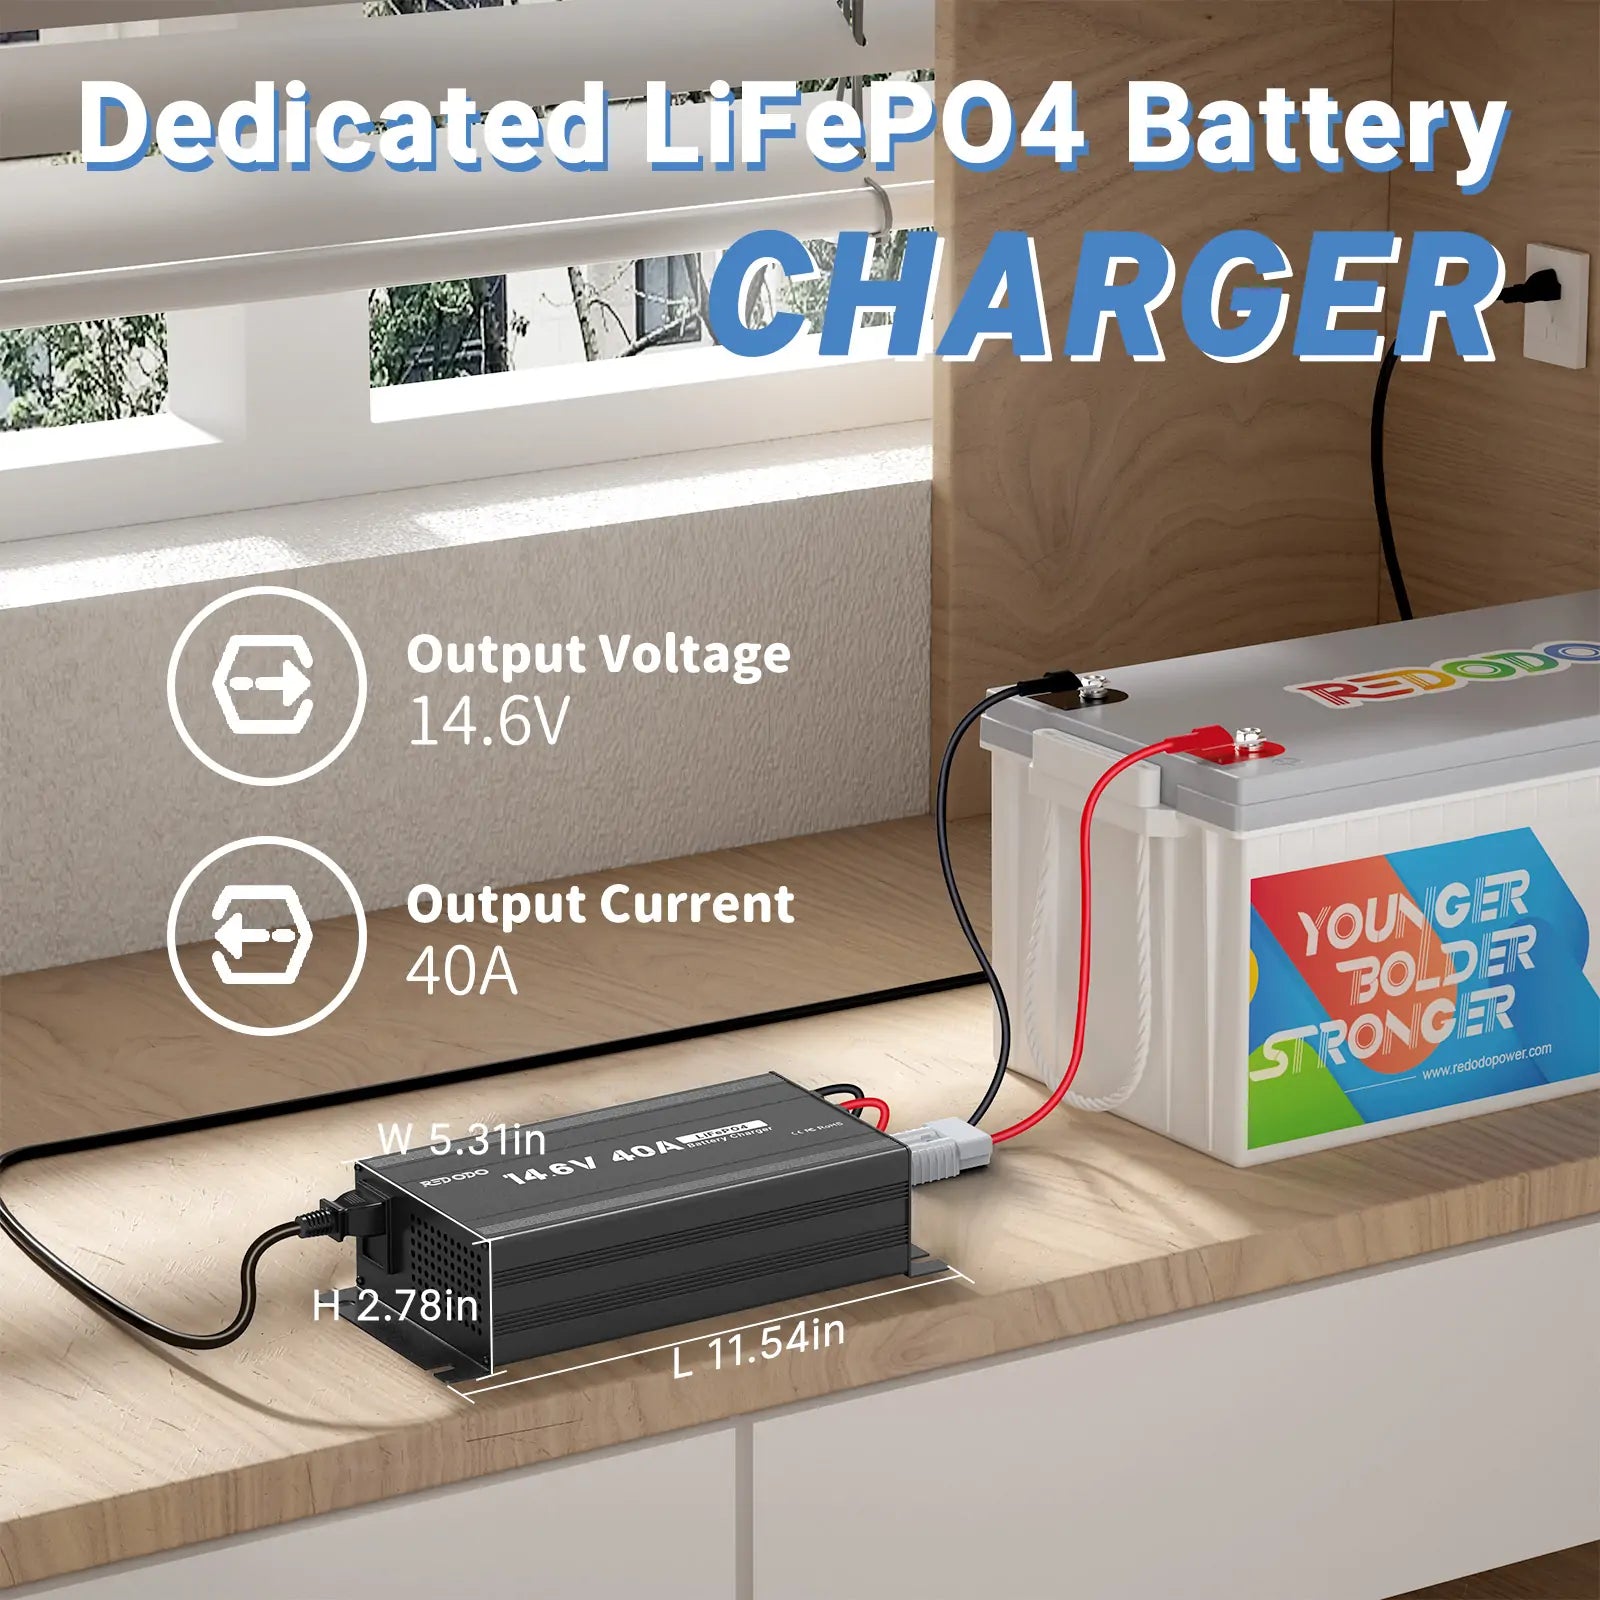 Redodo 14.6V 40 amp battery charger Wall-Mount Redodo Power